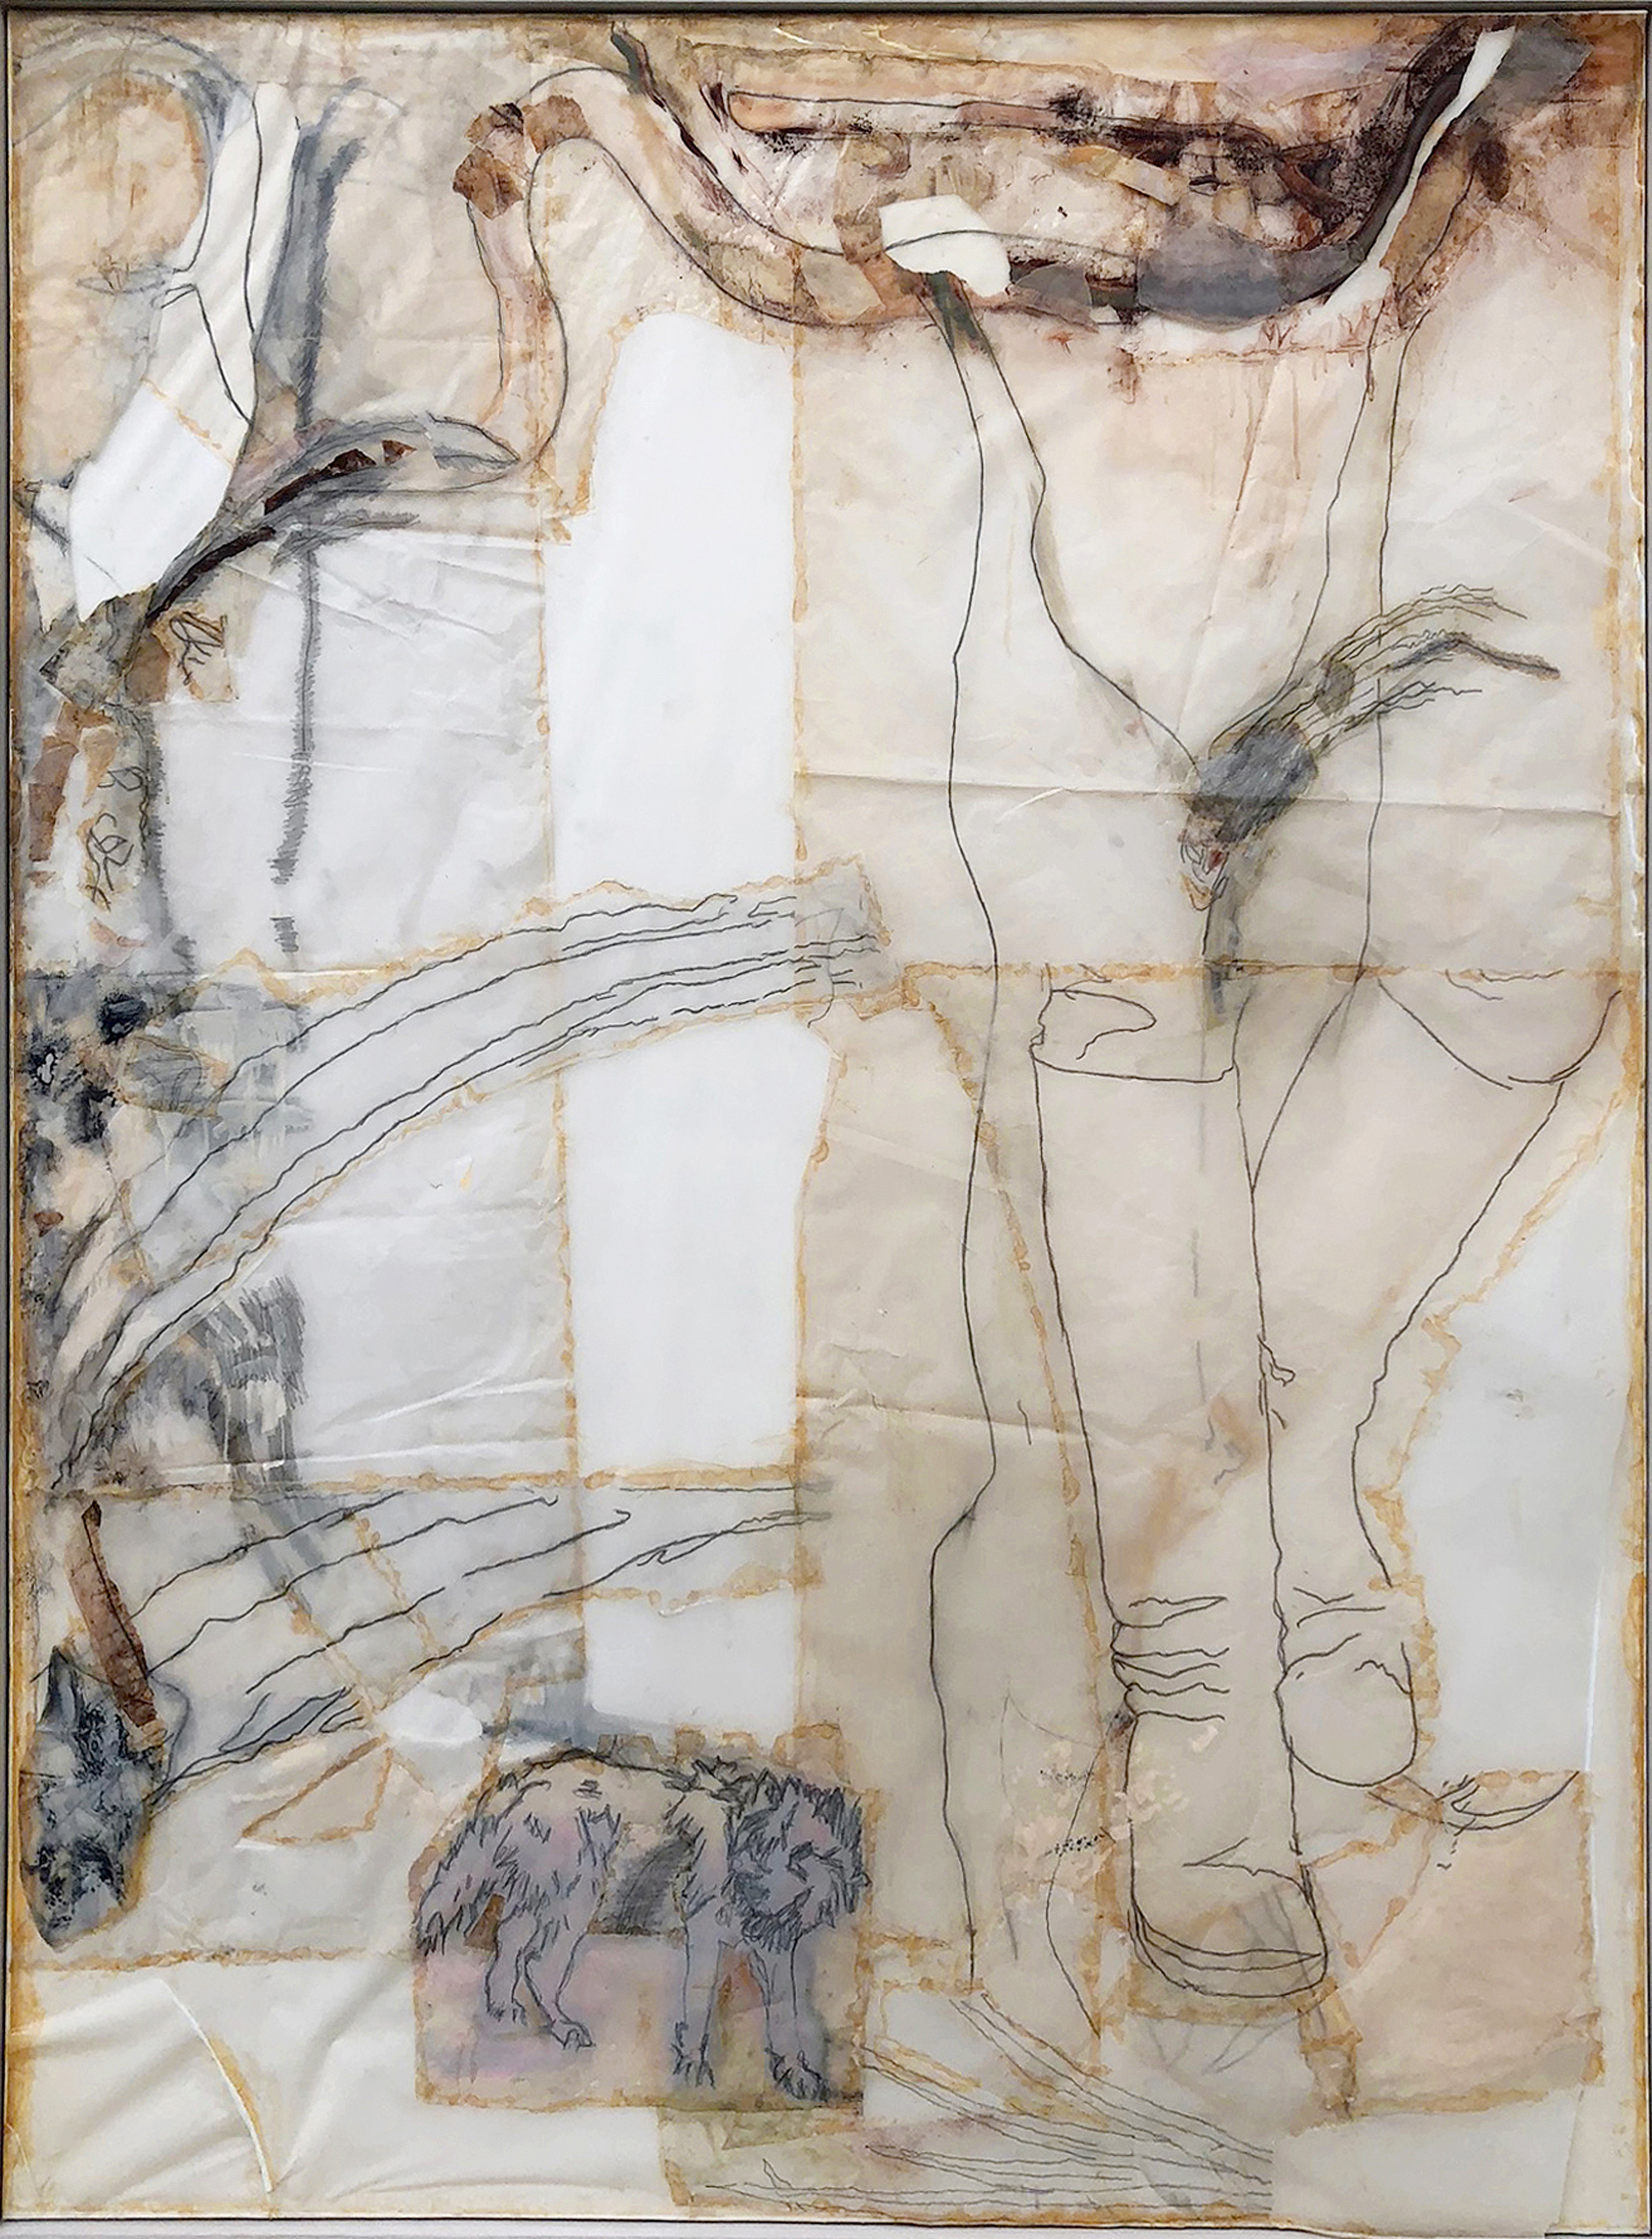 Galerie Barbara Thumm \ Jo Baer – Works on paper 1962–2018 \ The River Thame (1992)